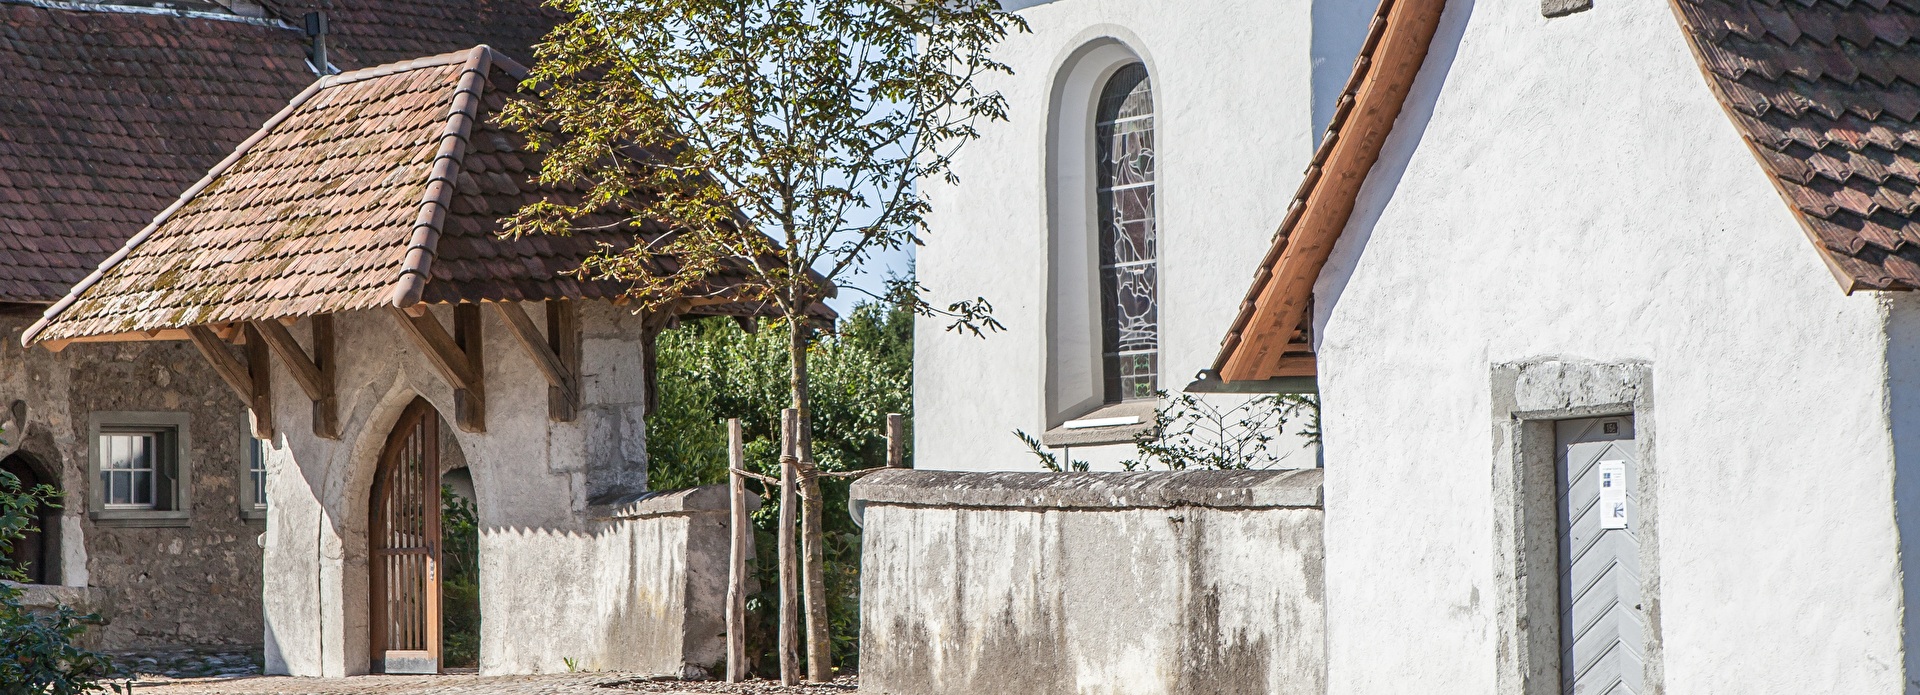 Reformierte Kirche Niederbipp